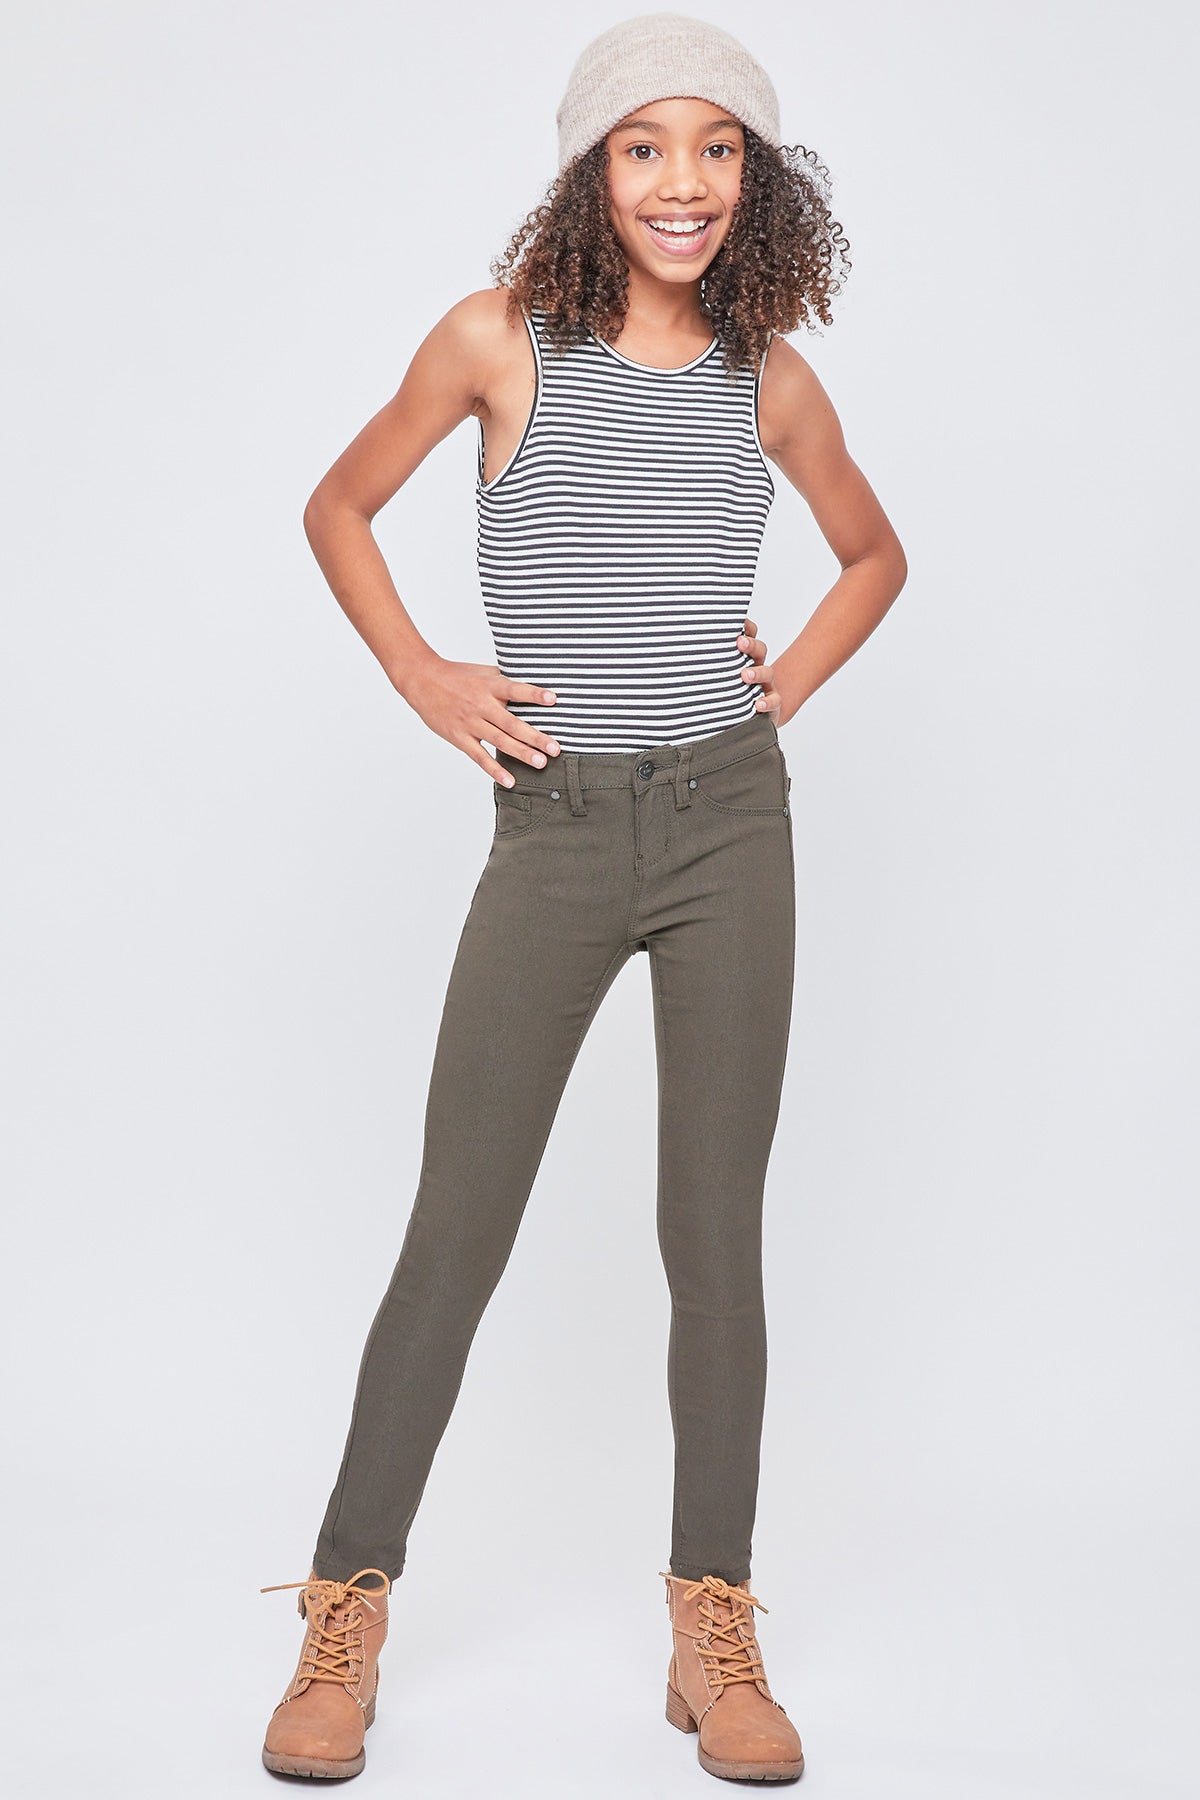 RESTOCK  YMI Hyperstretch Skinny Jeans, Navy – Sew Southern Designs